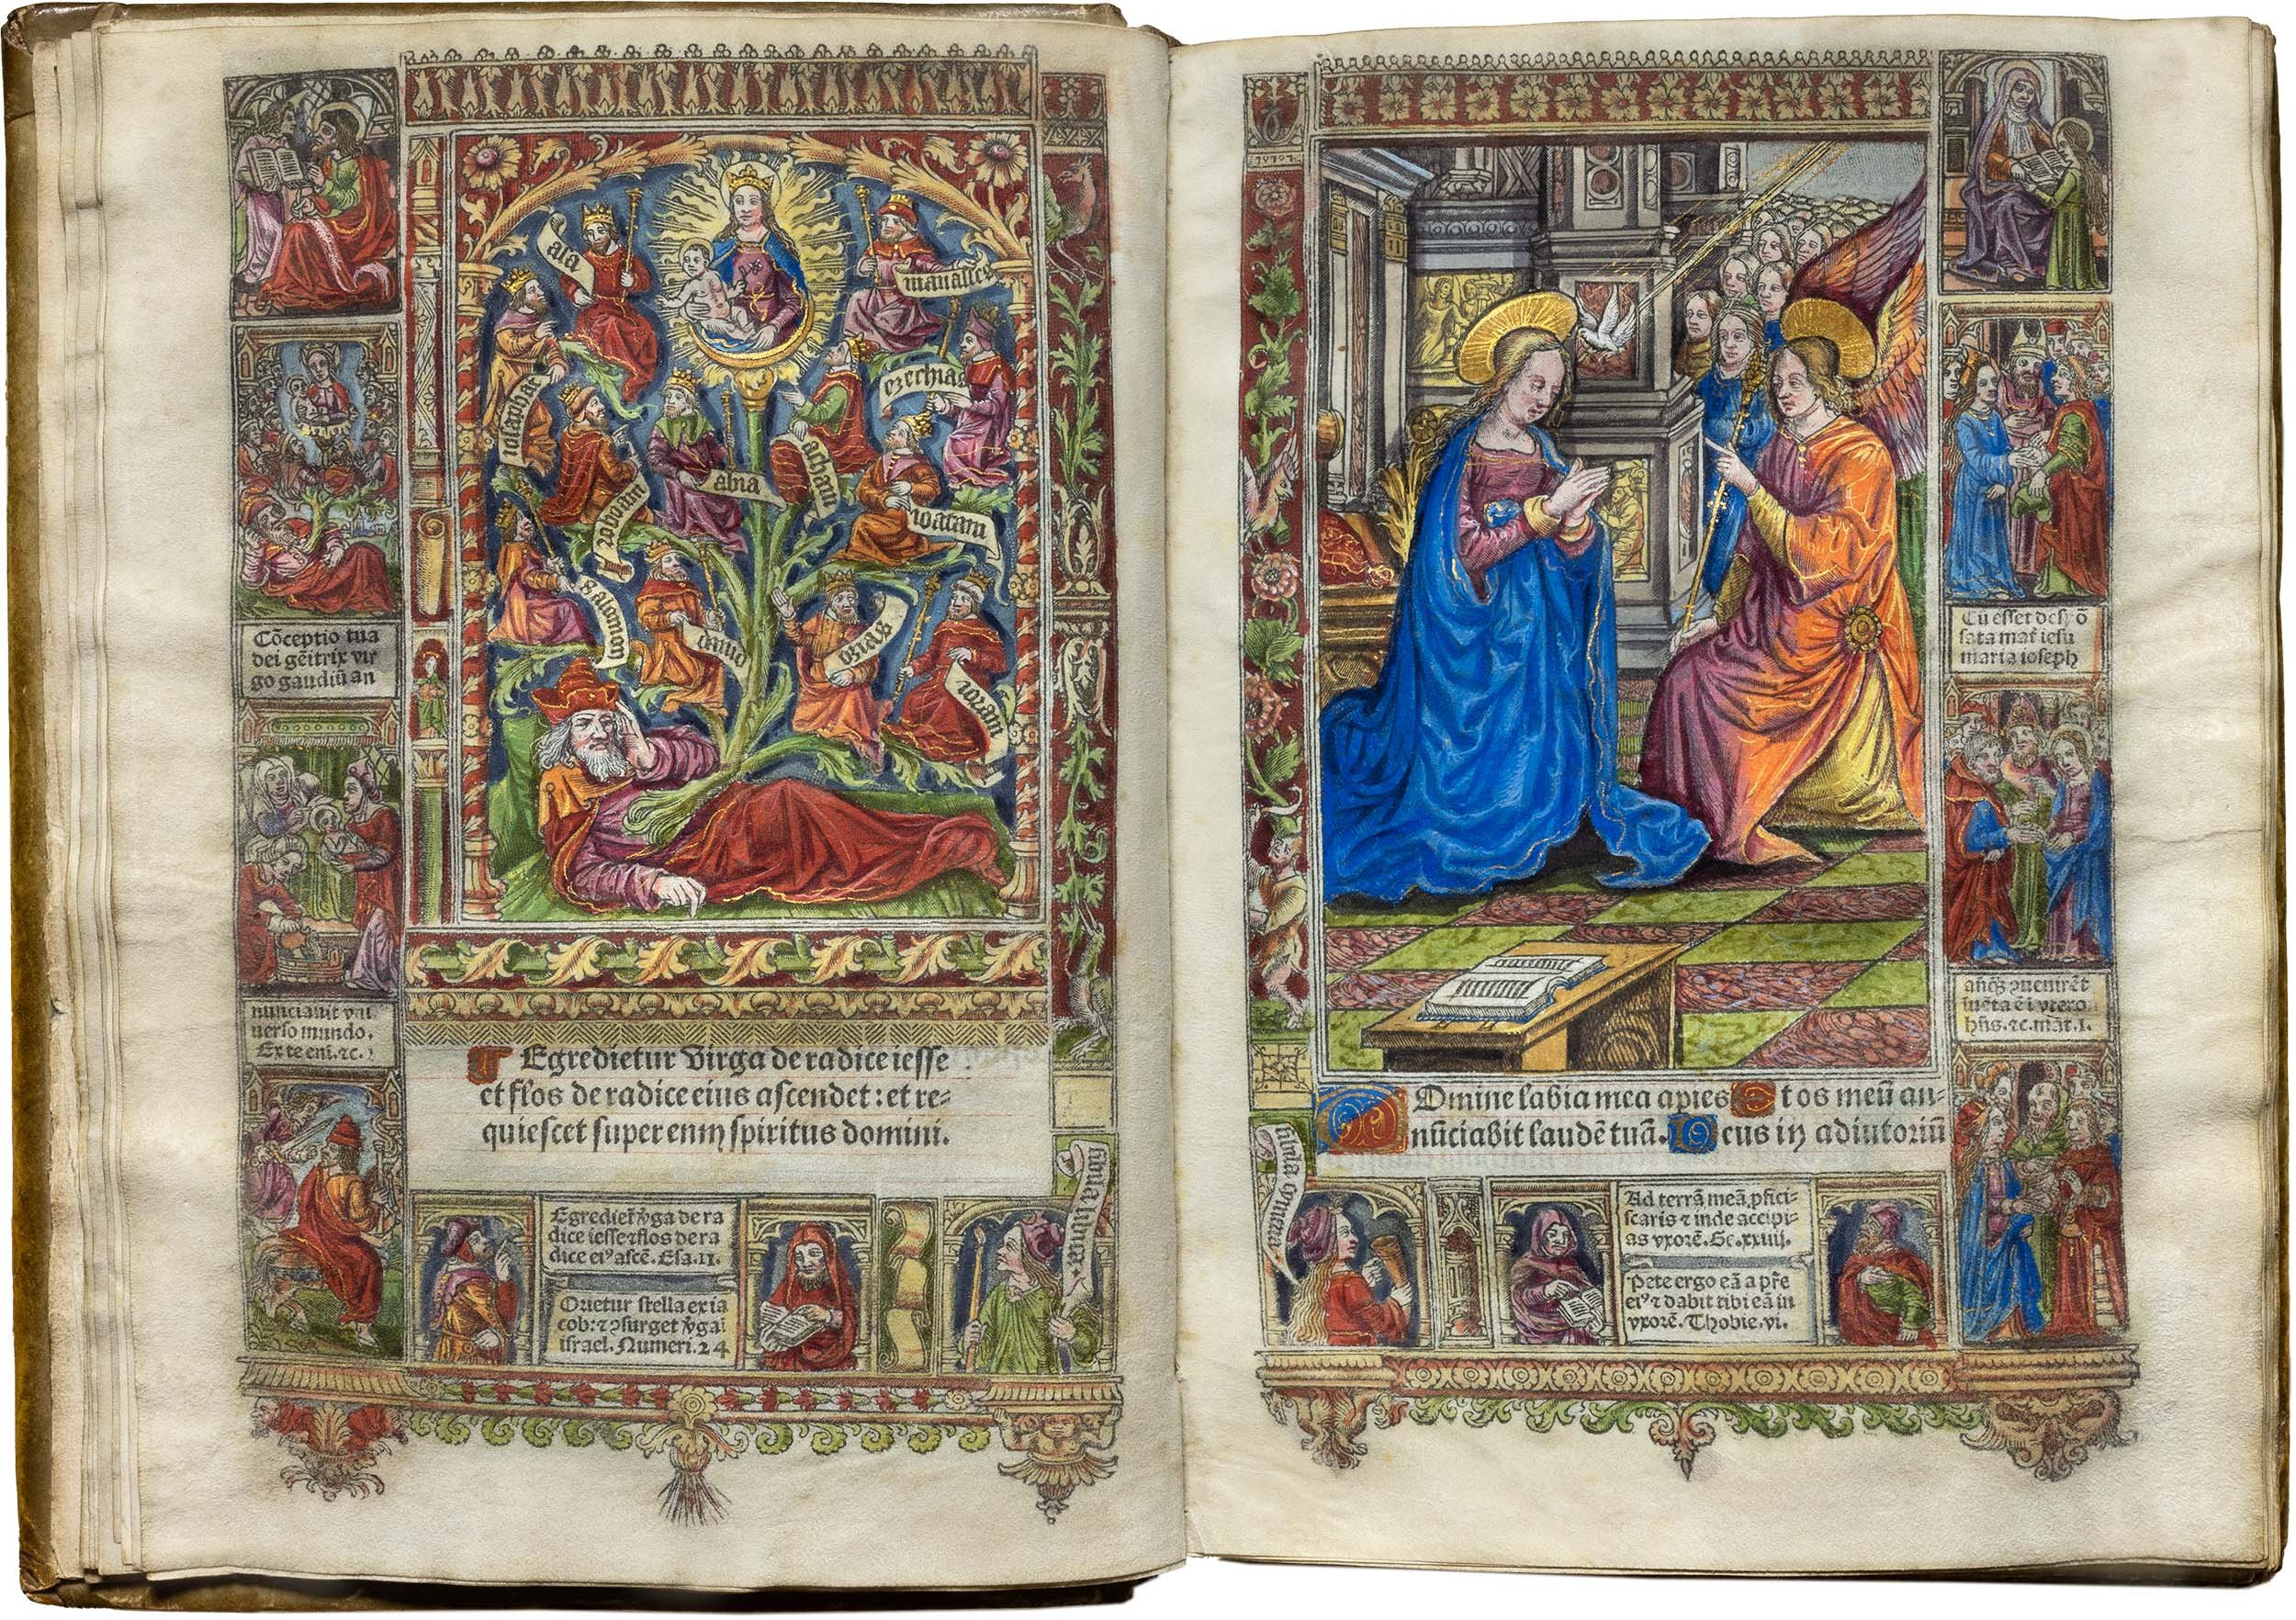 Horae-bmv-31-march-1511-kerver-printed-book-of-hours-illuminated-copy-vellum-19.jpg